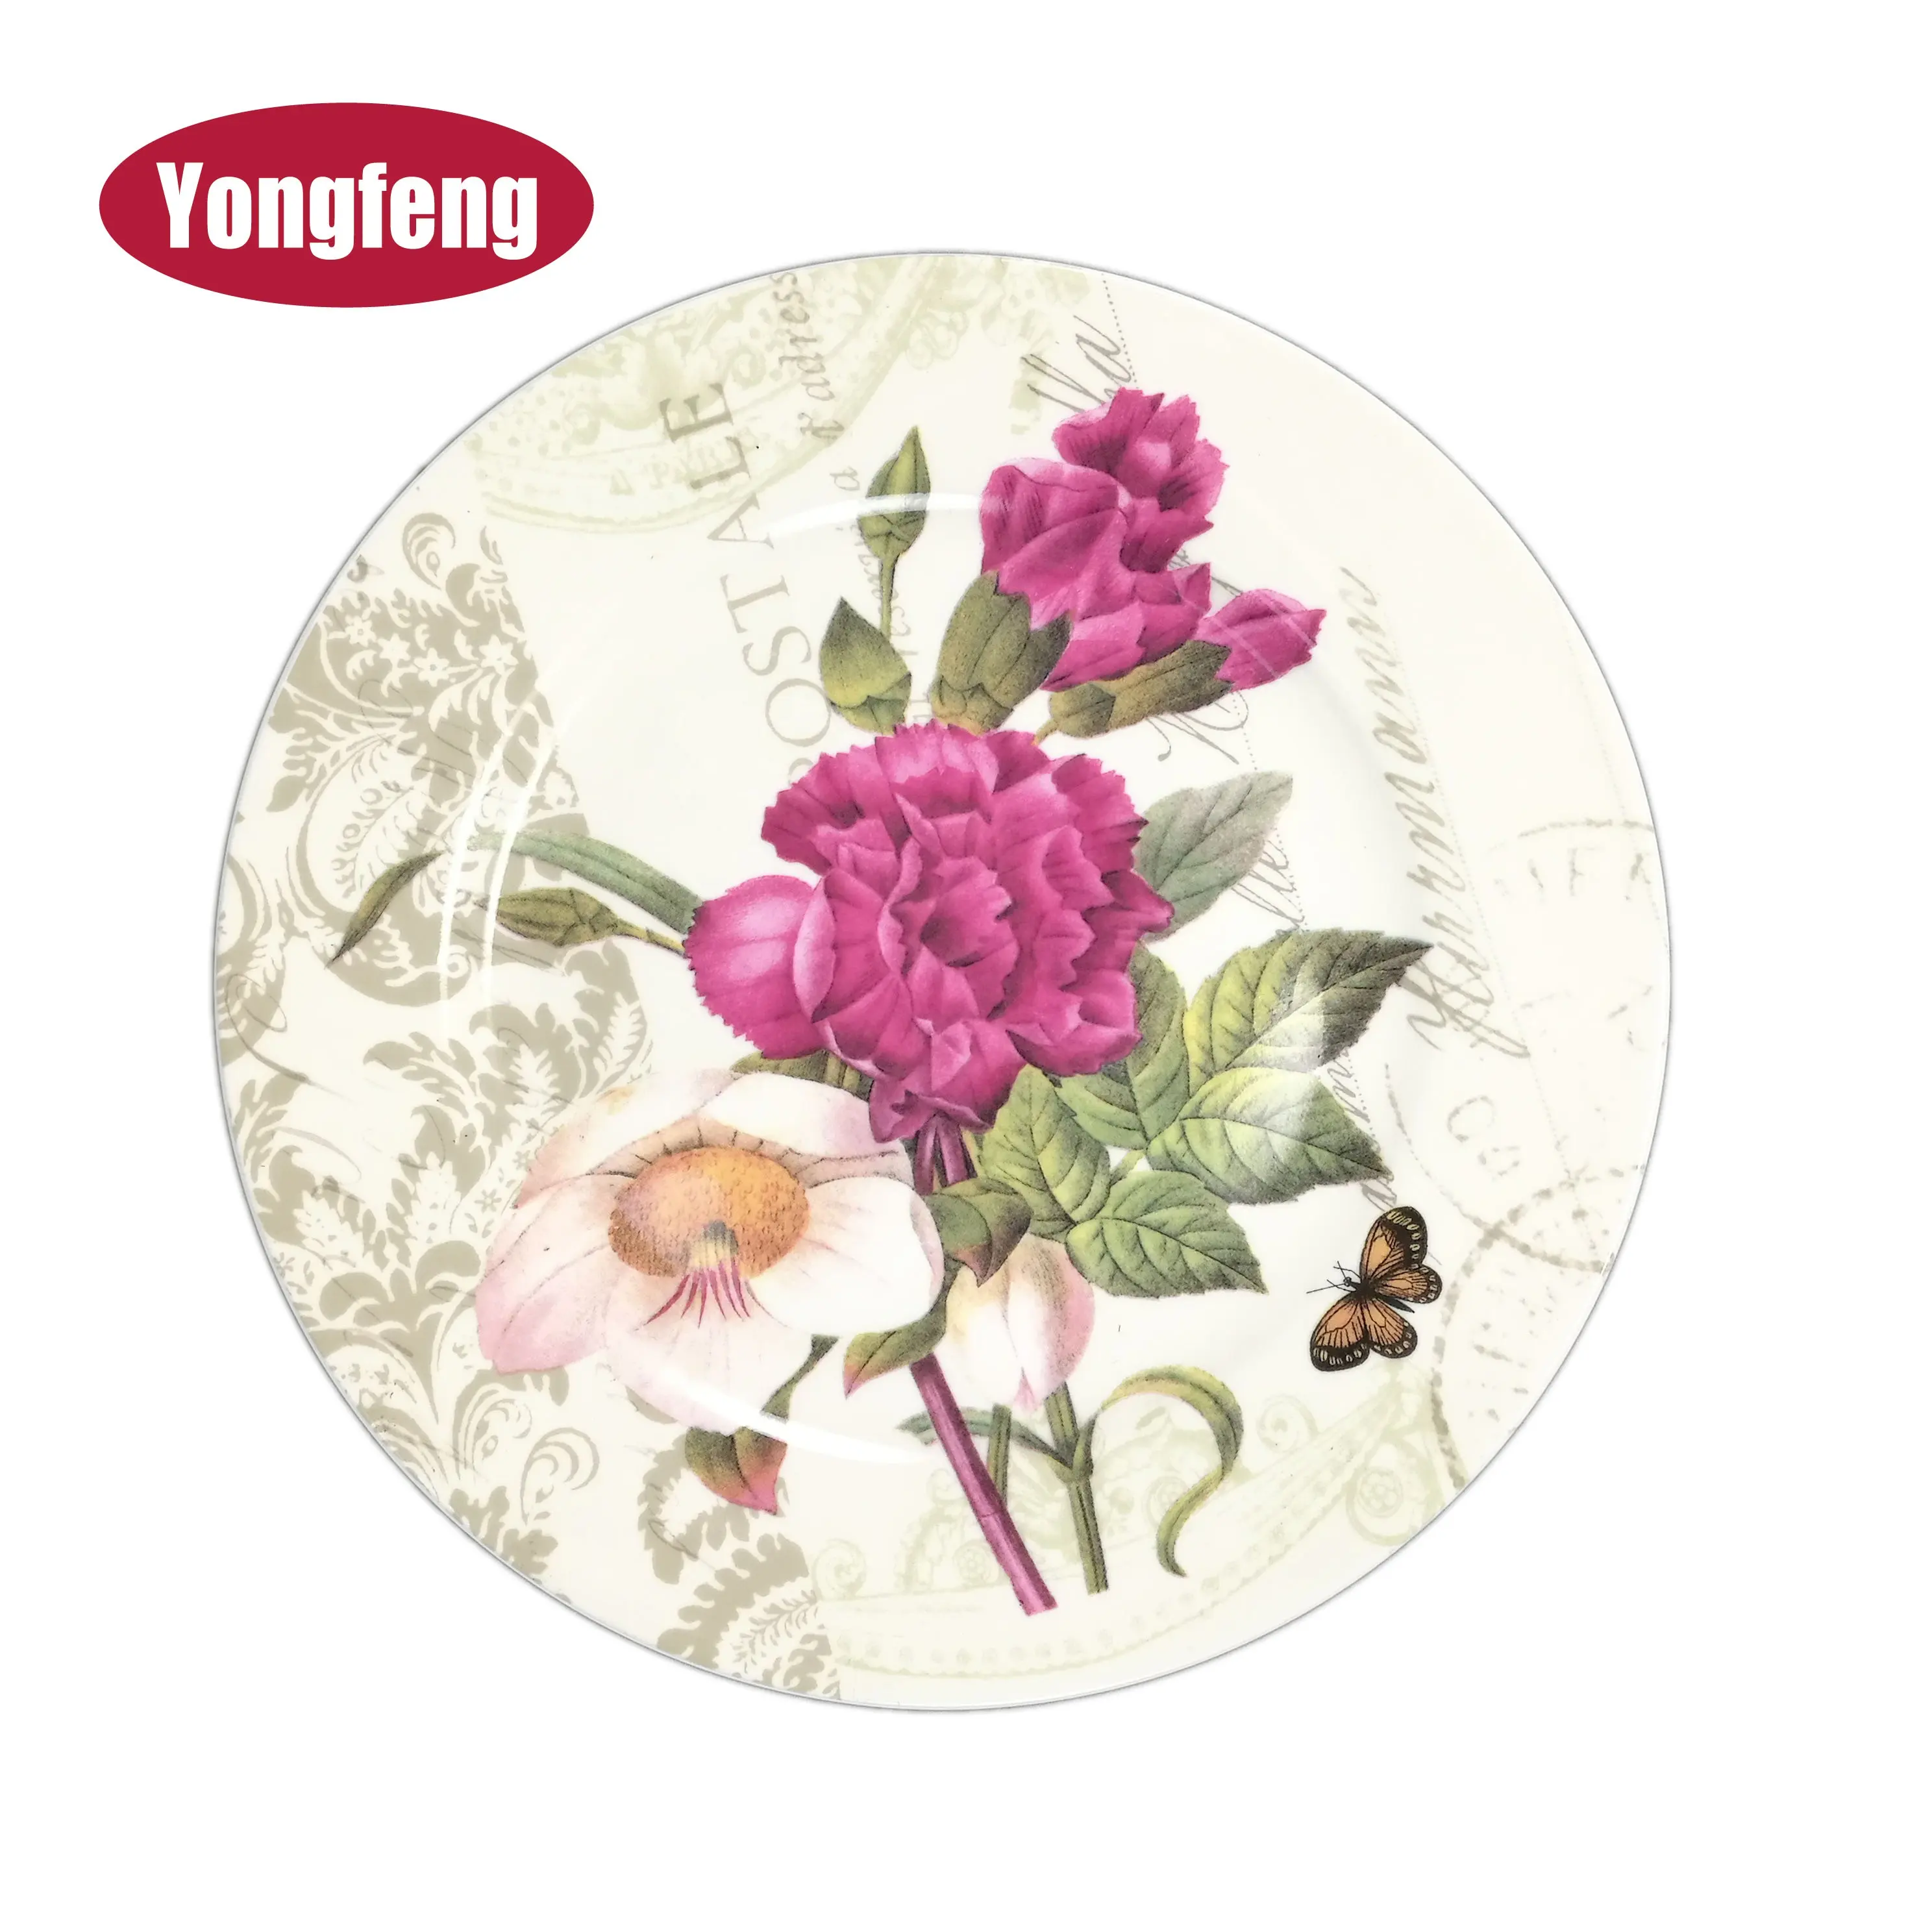 Platos decorativos de cerámica, suministro de fábrica de china, diseño de flores, 7,6 pulgadas, barato